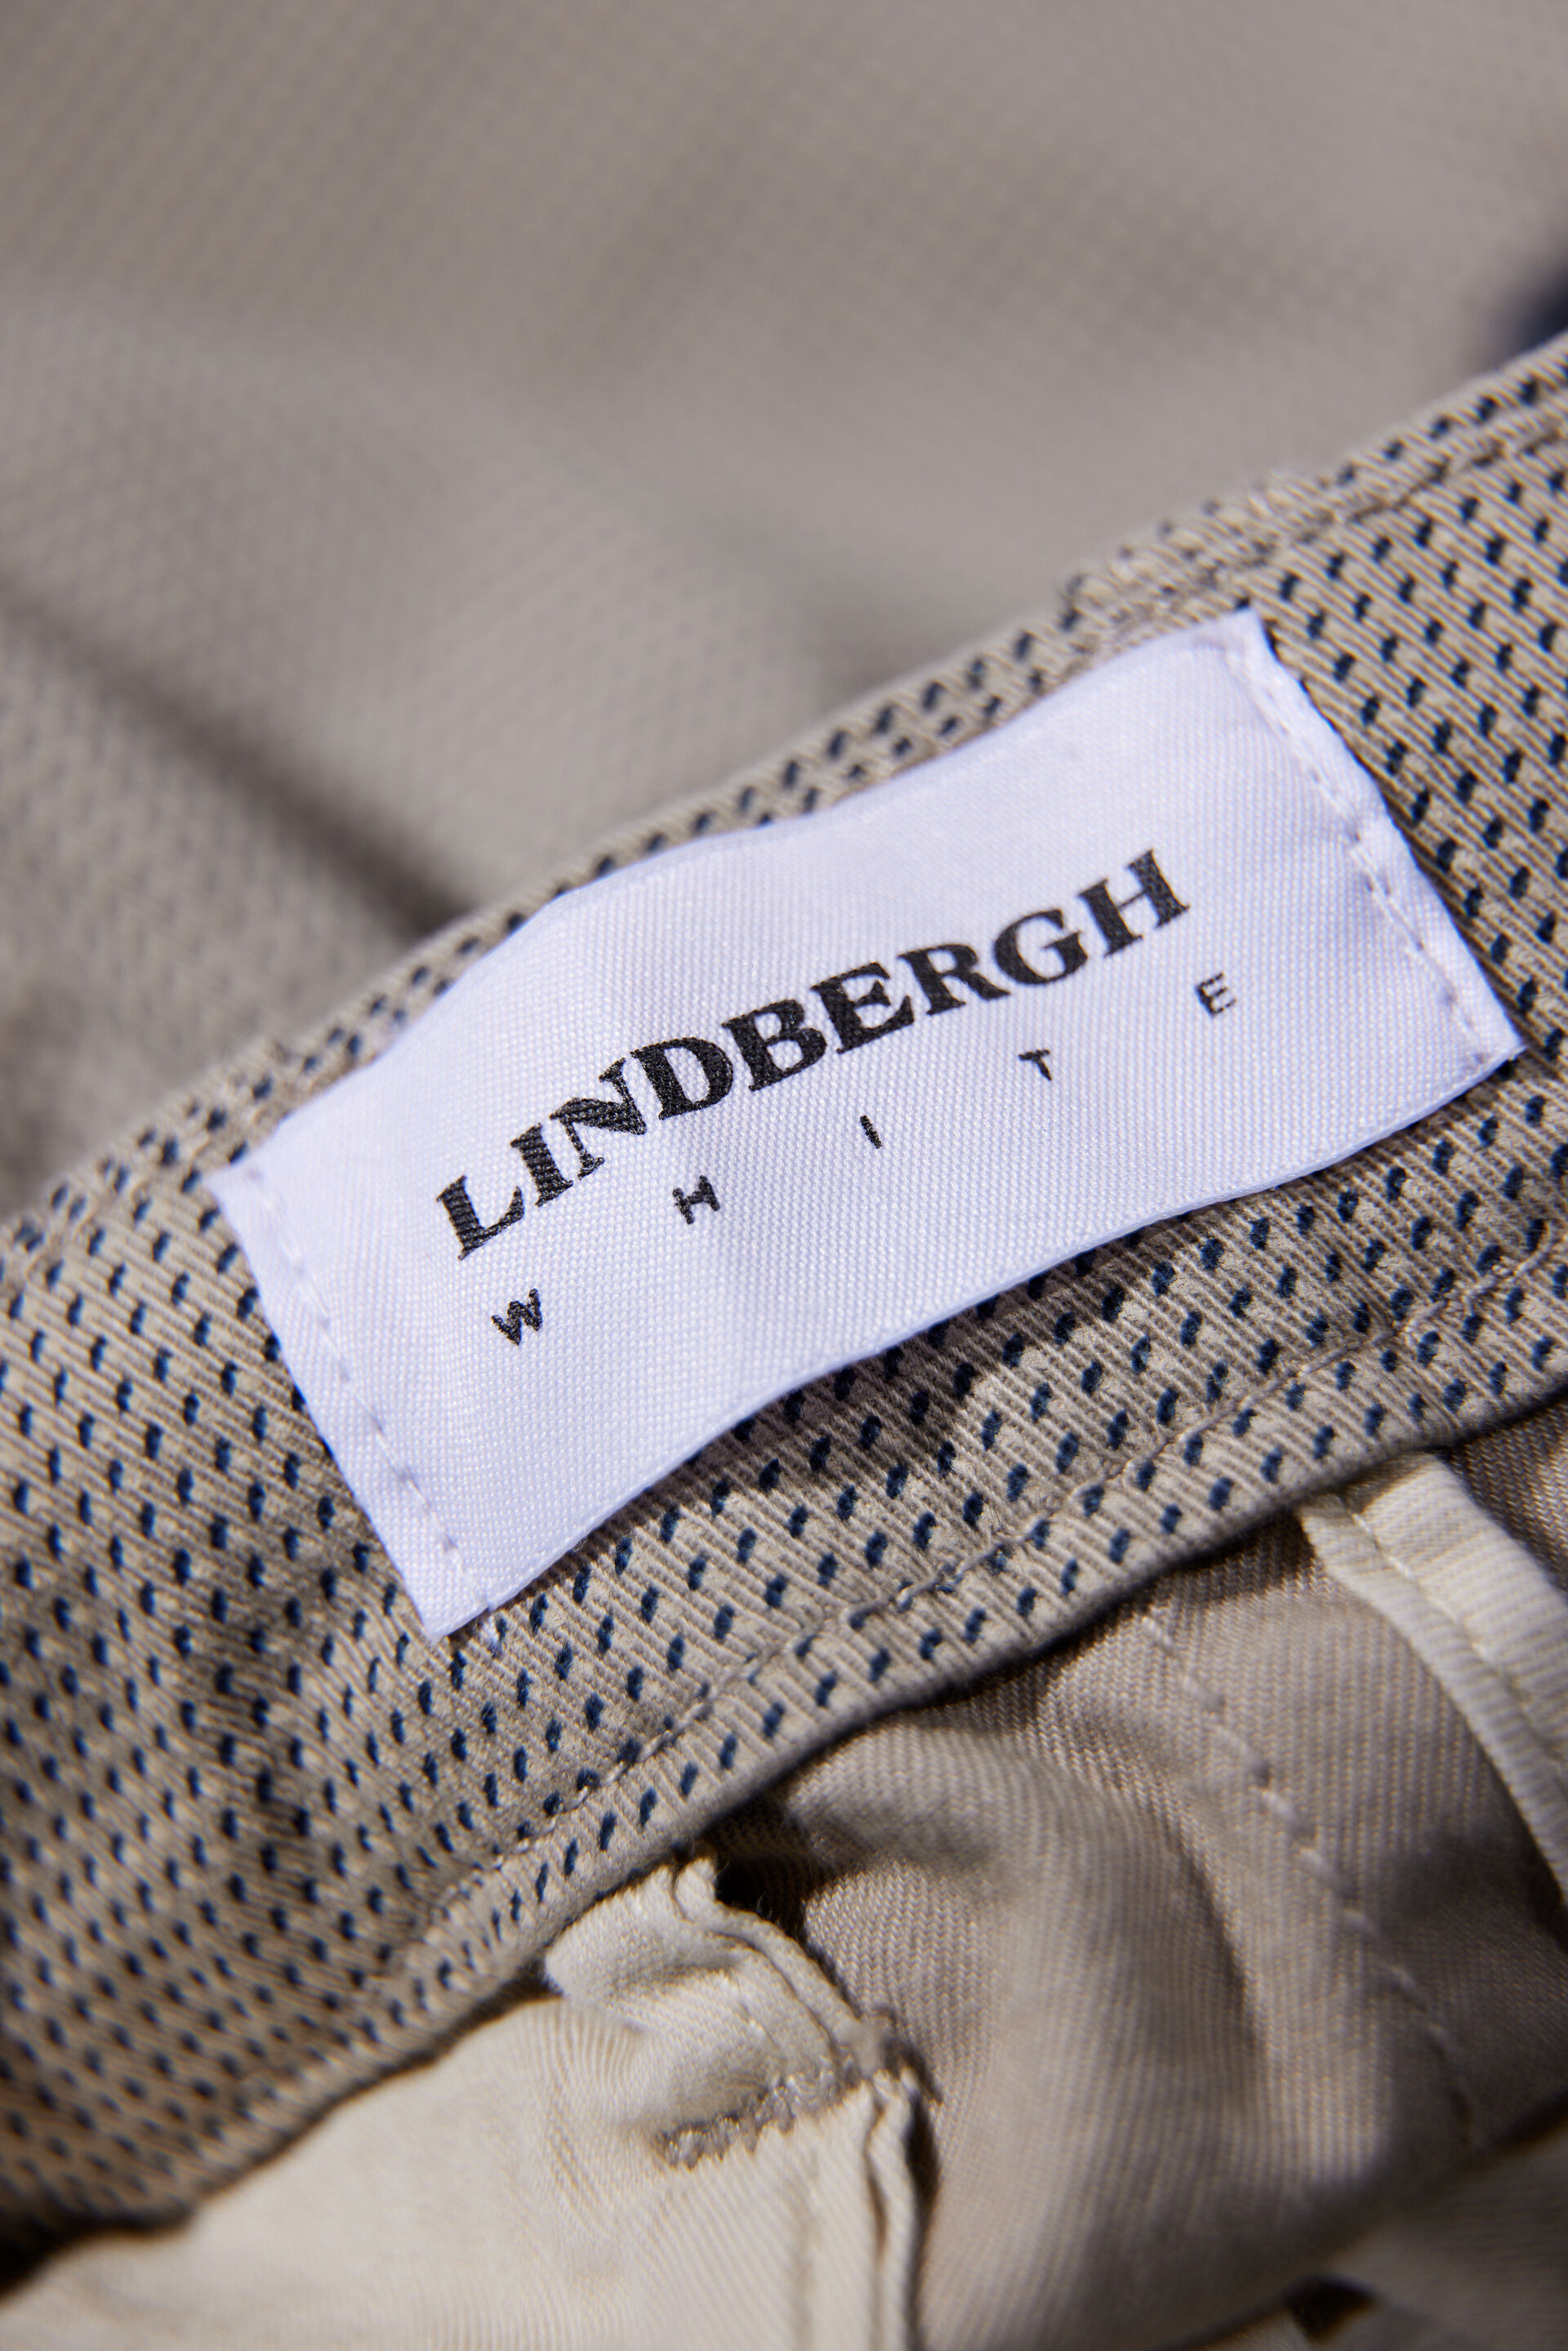 Lindbergh  Chino shorts 30-505045B